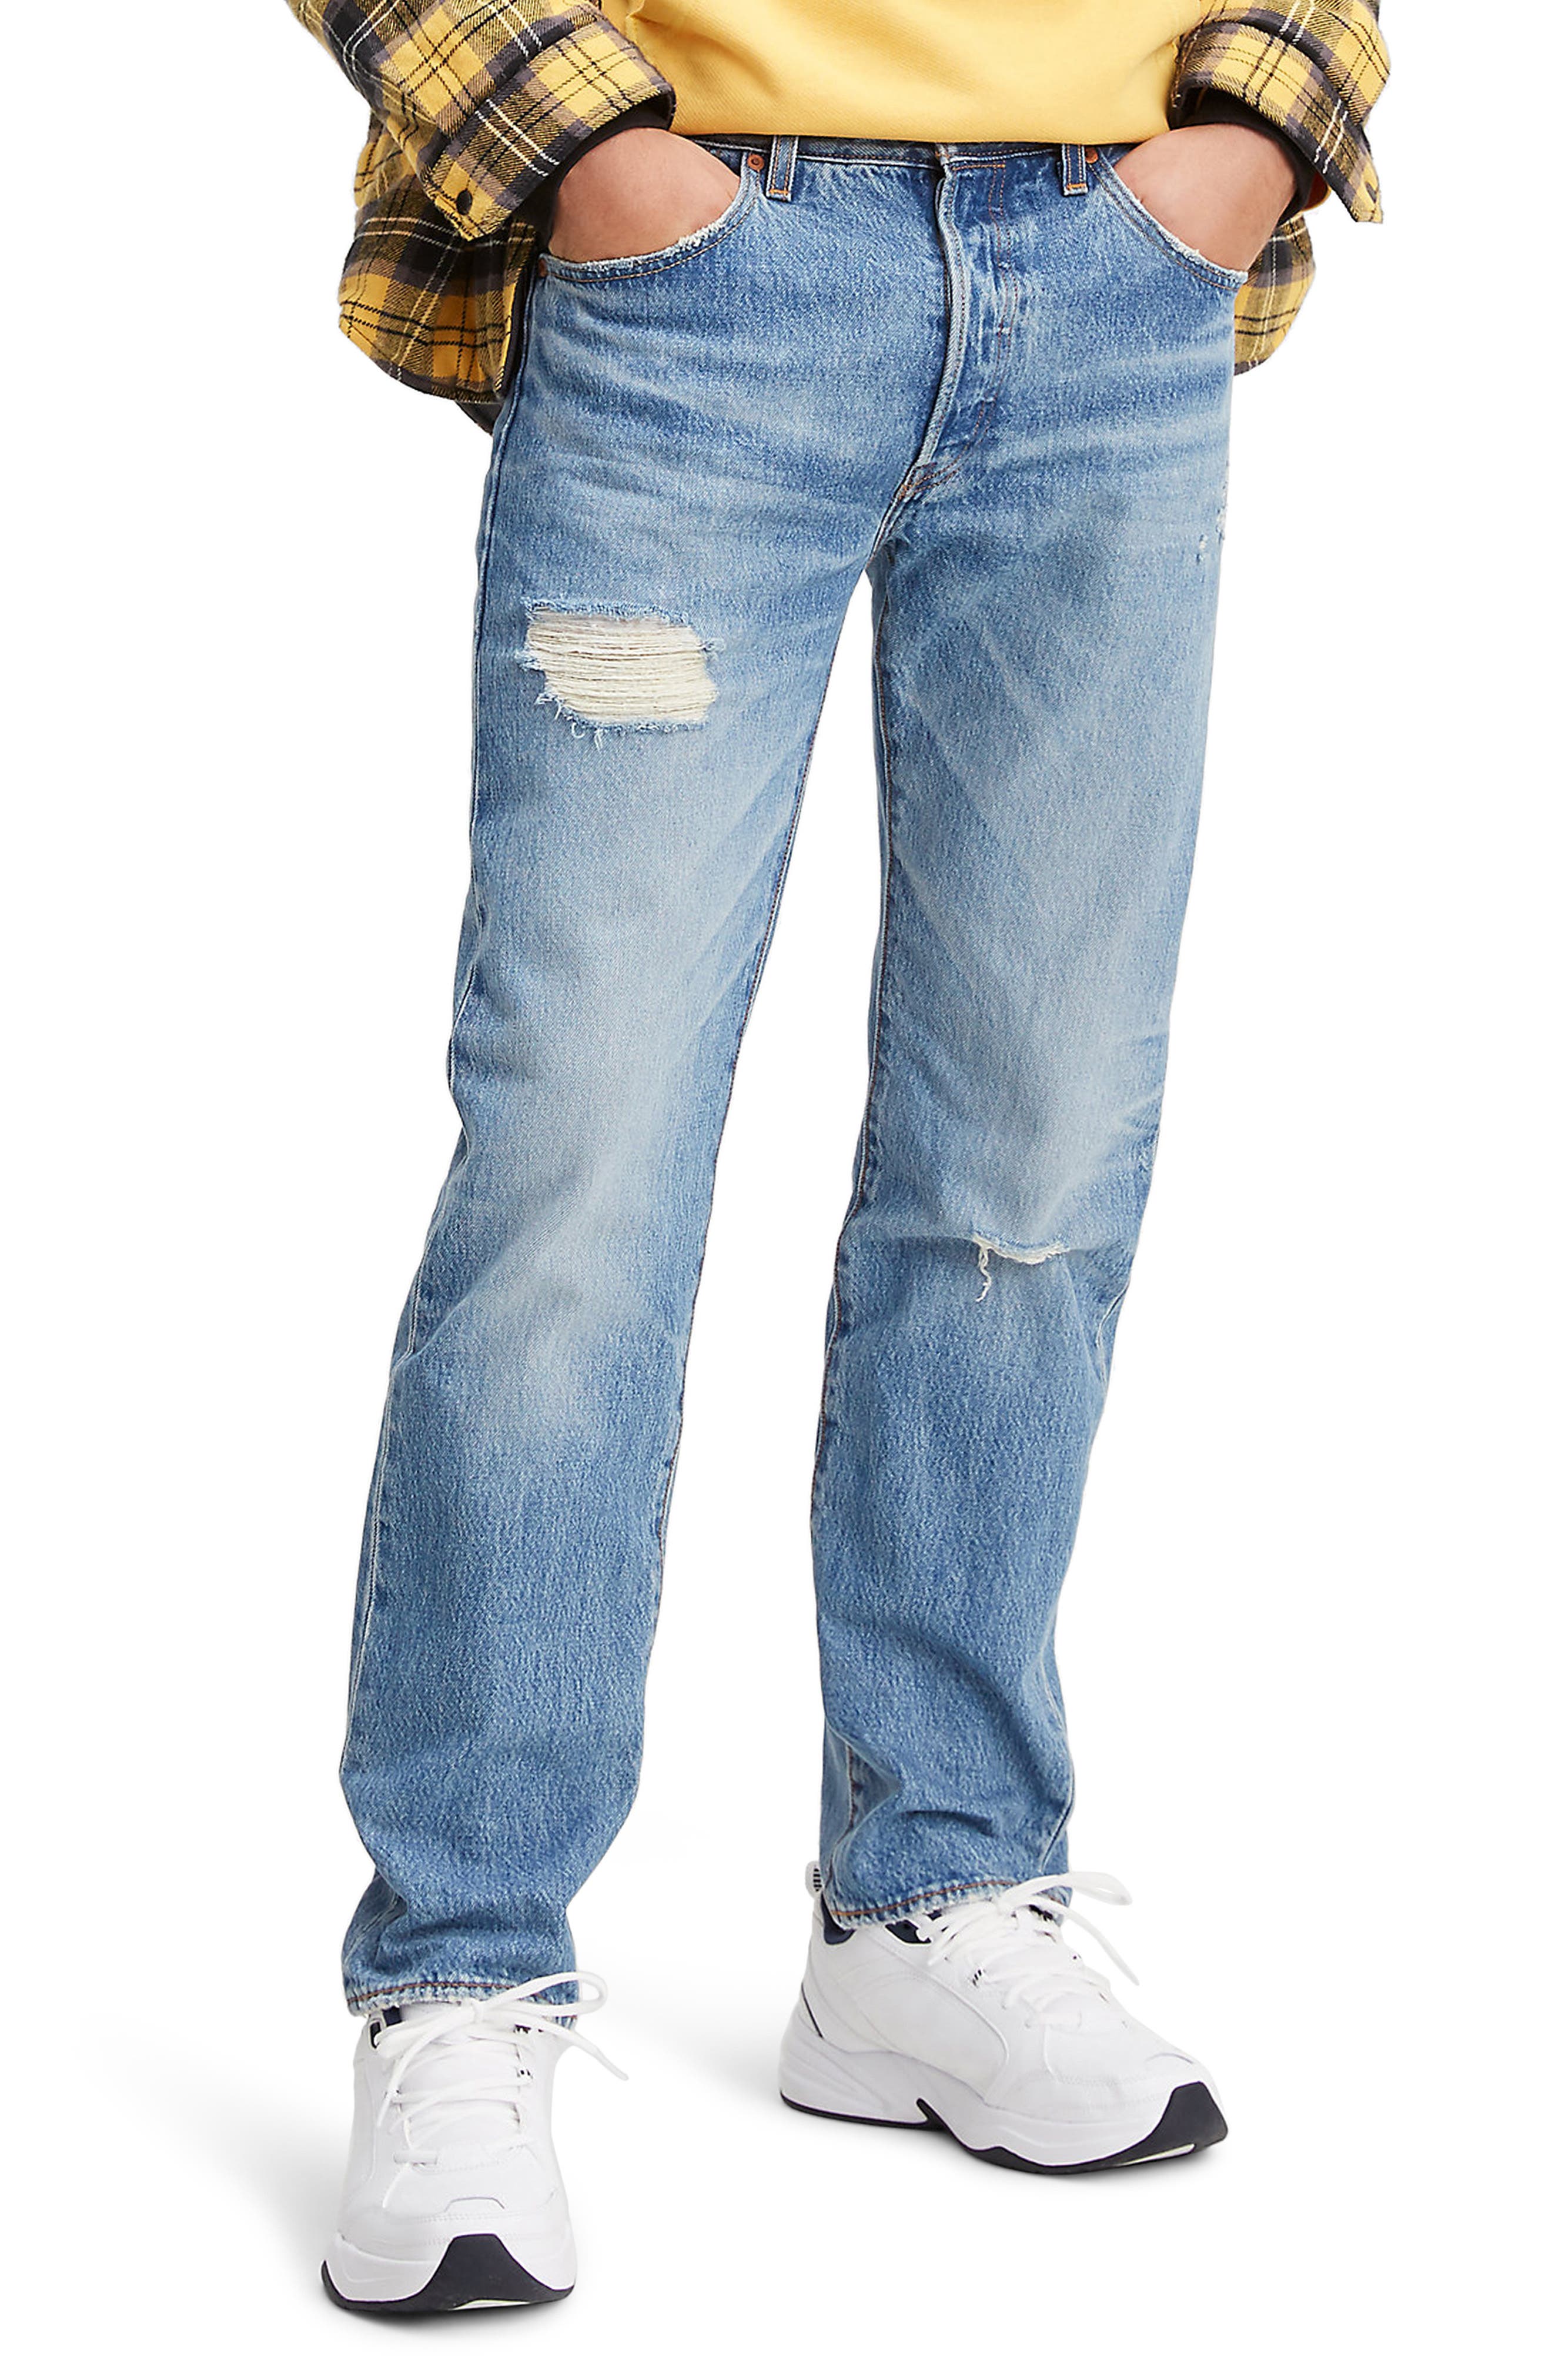 levis bike jeans